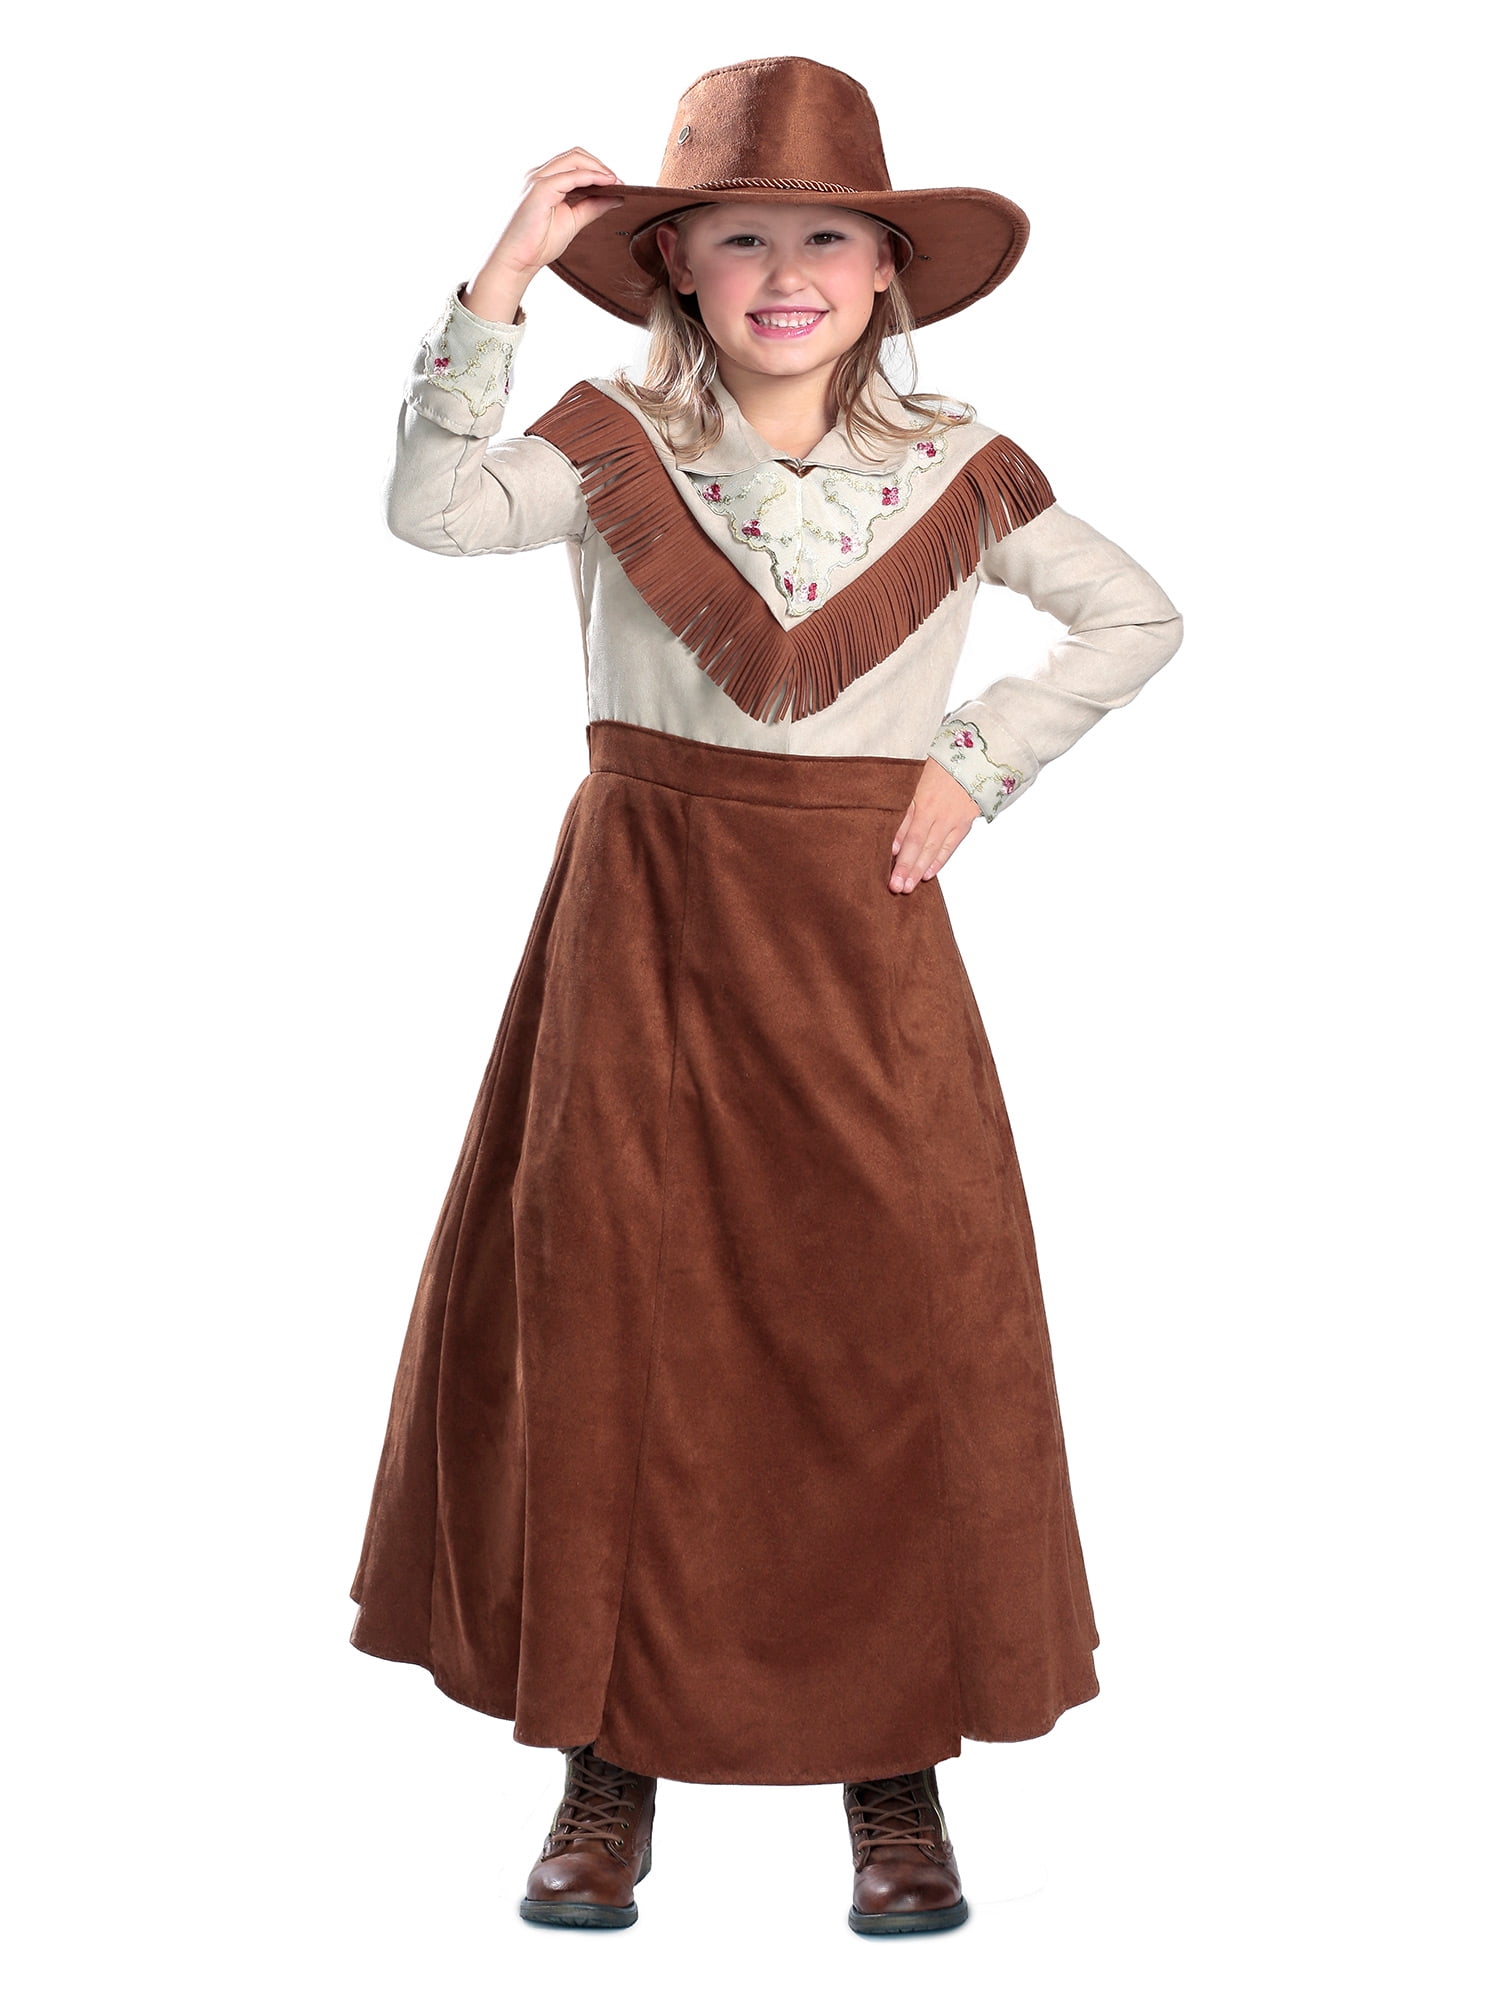 Sharpshooter Annie Costume for Kids - Walmart.com - Walmart.com